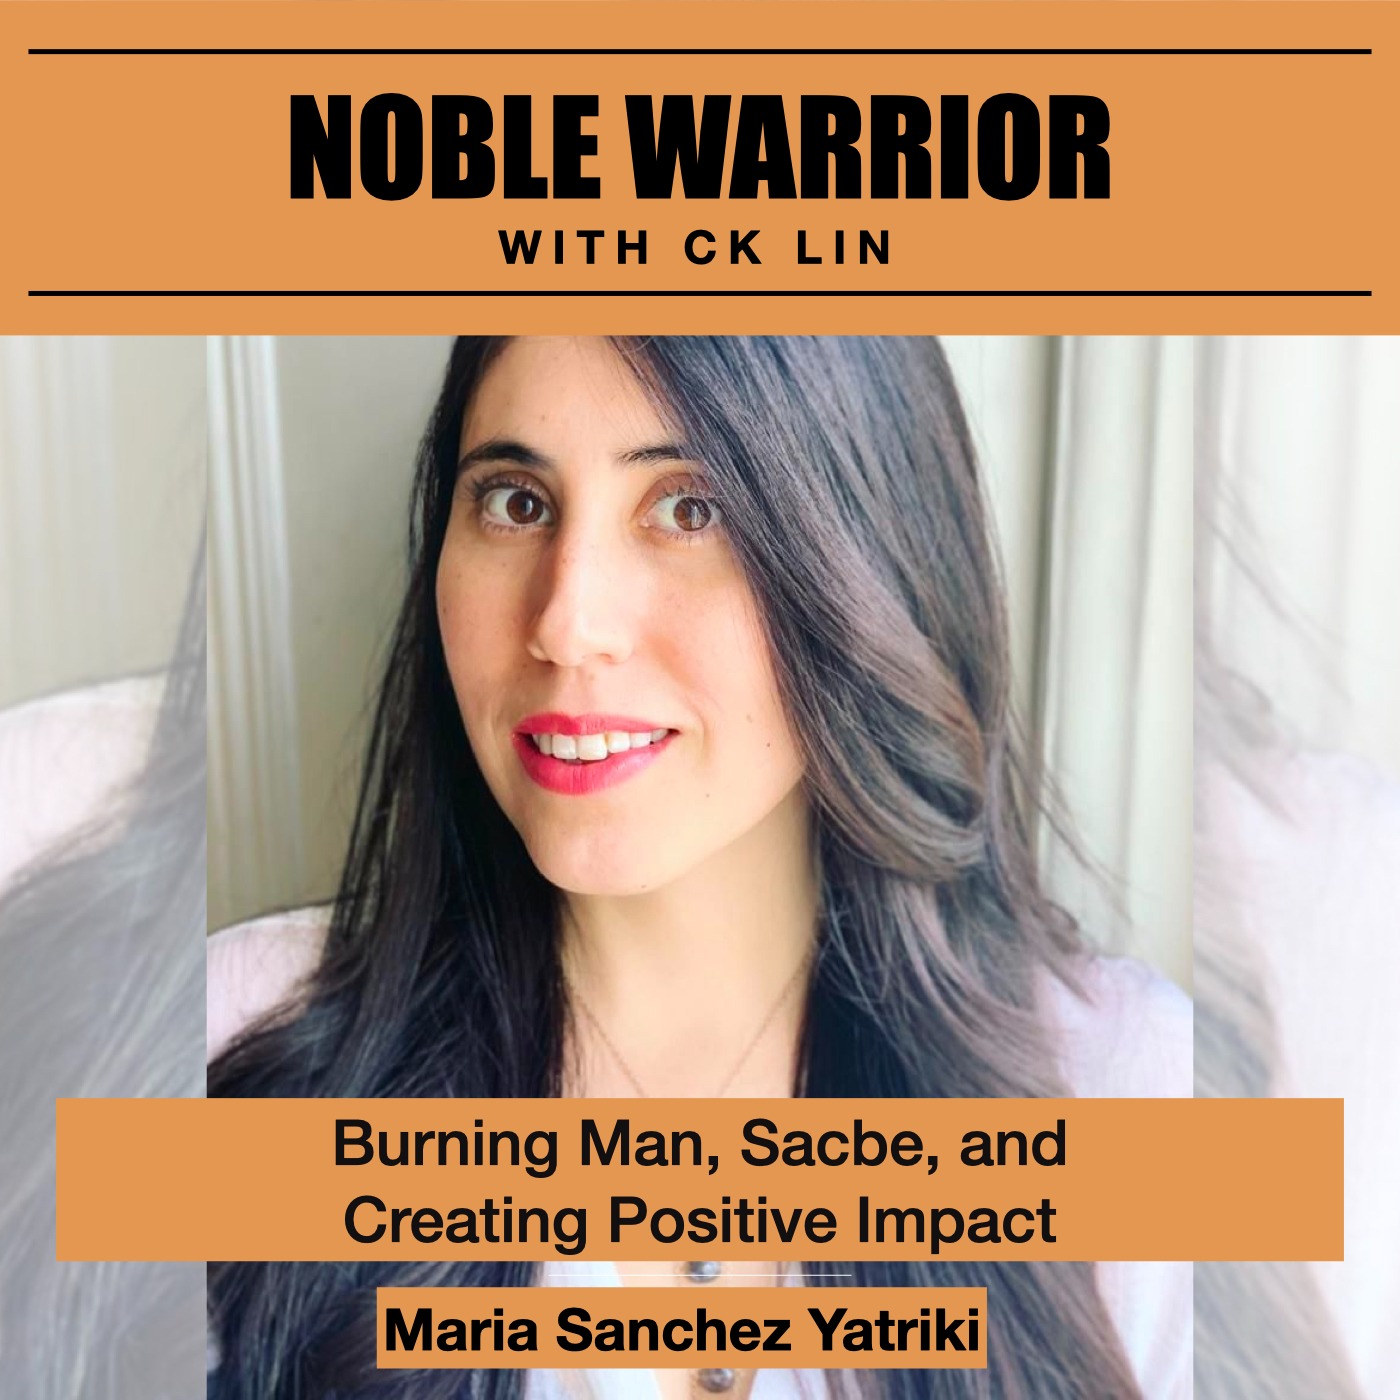 159 Maria Sanchez Yatriki: Burning Man, Sacbe, and Creating Positive Impact Image